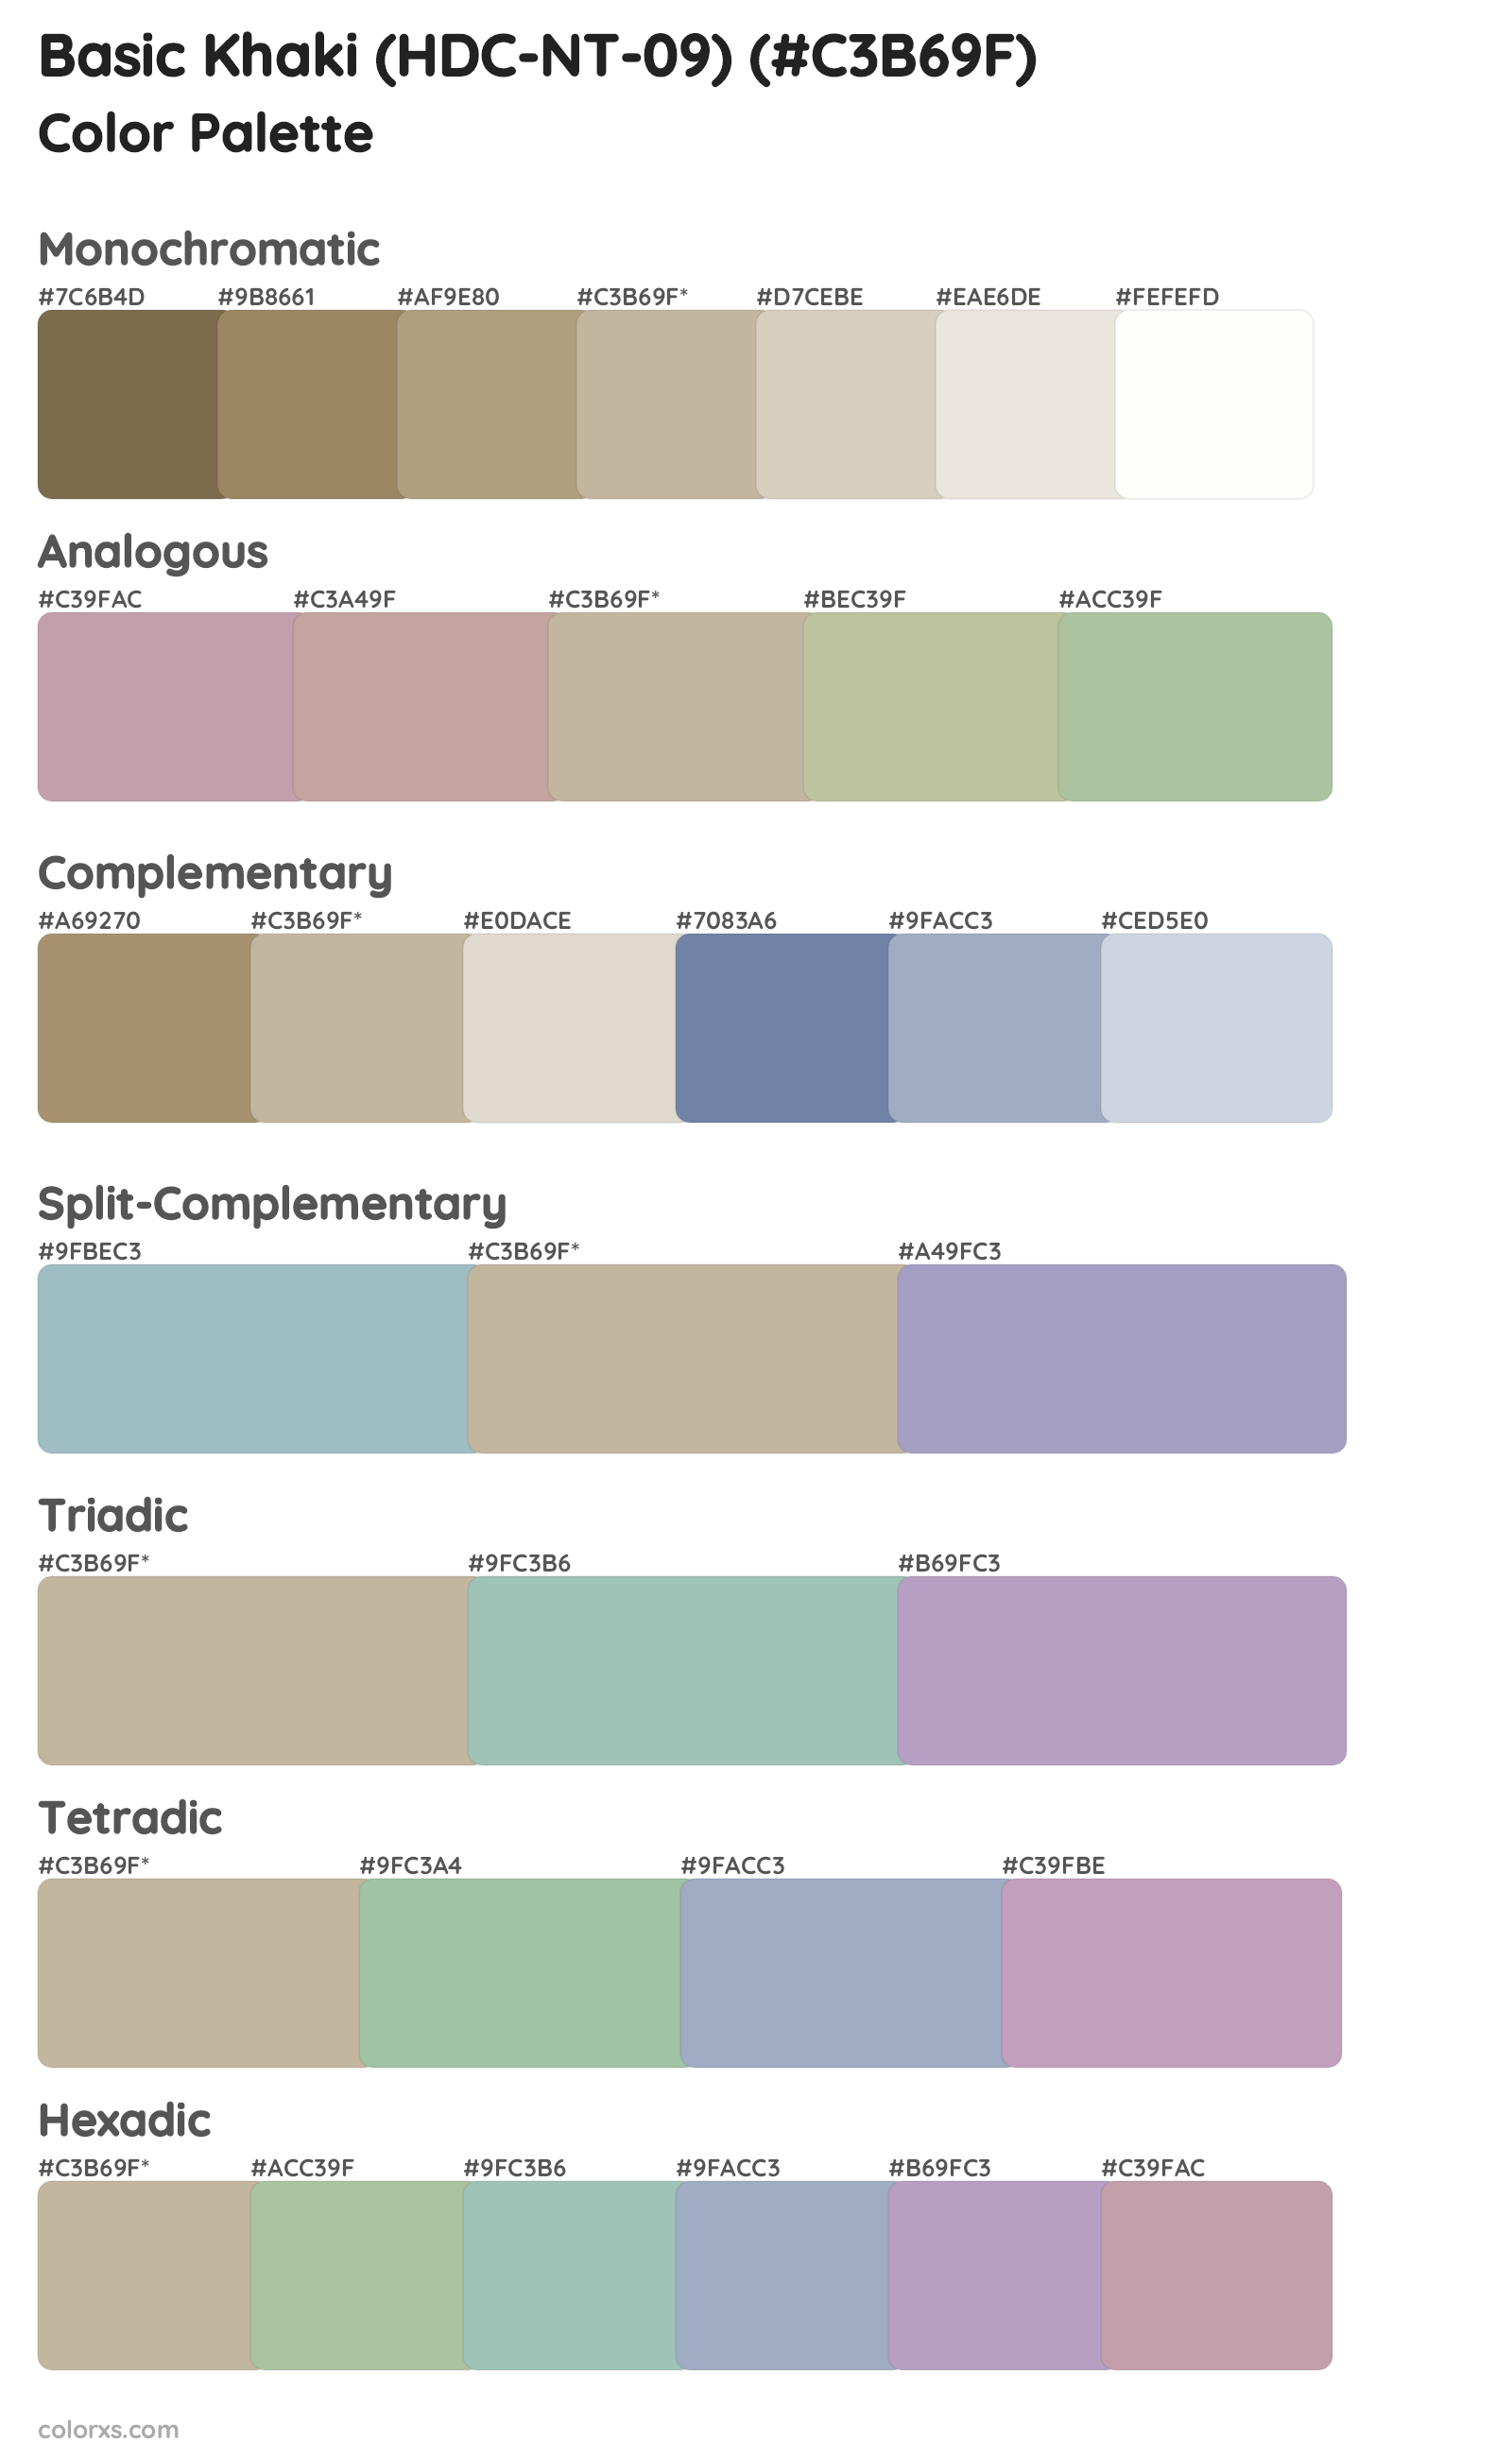 Basic Khaki (HDC-NT-09) Color Scheme Palettes